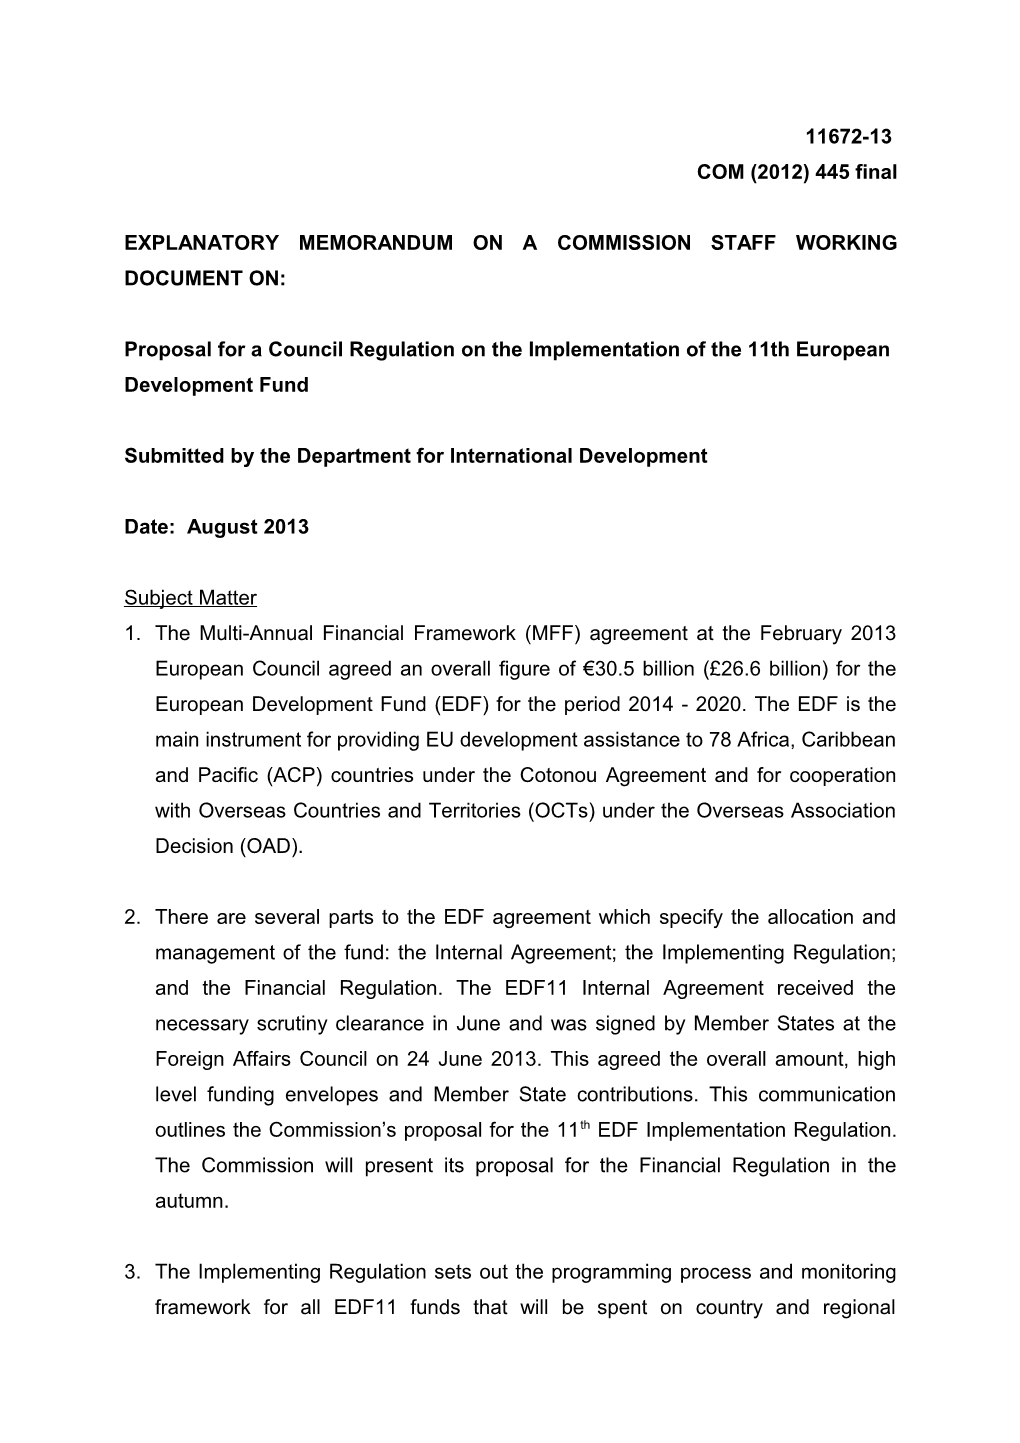 Explanatory Memorandum on a Commission Staff Working Document On